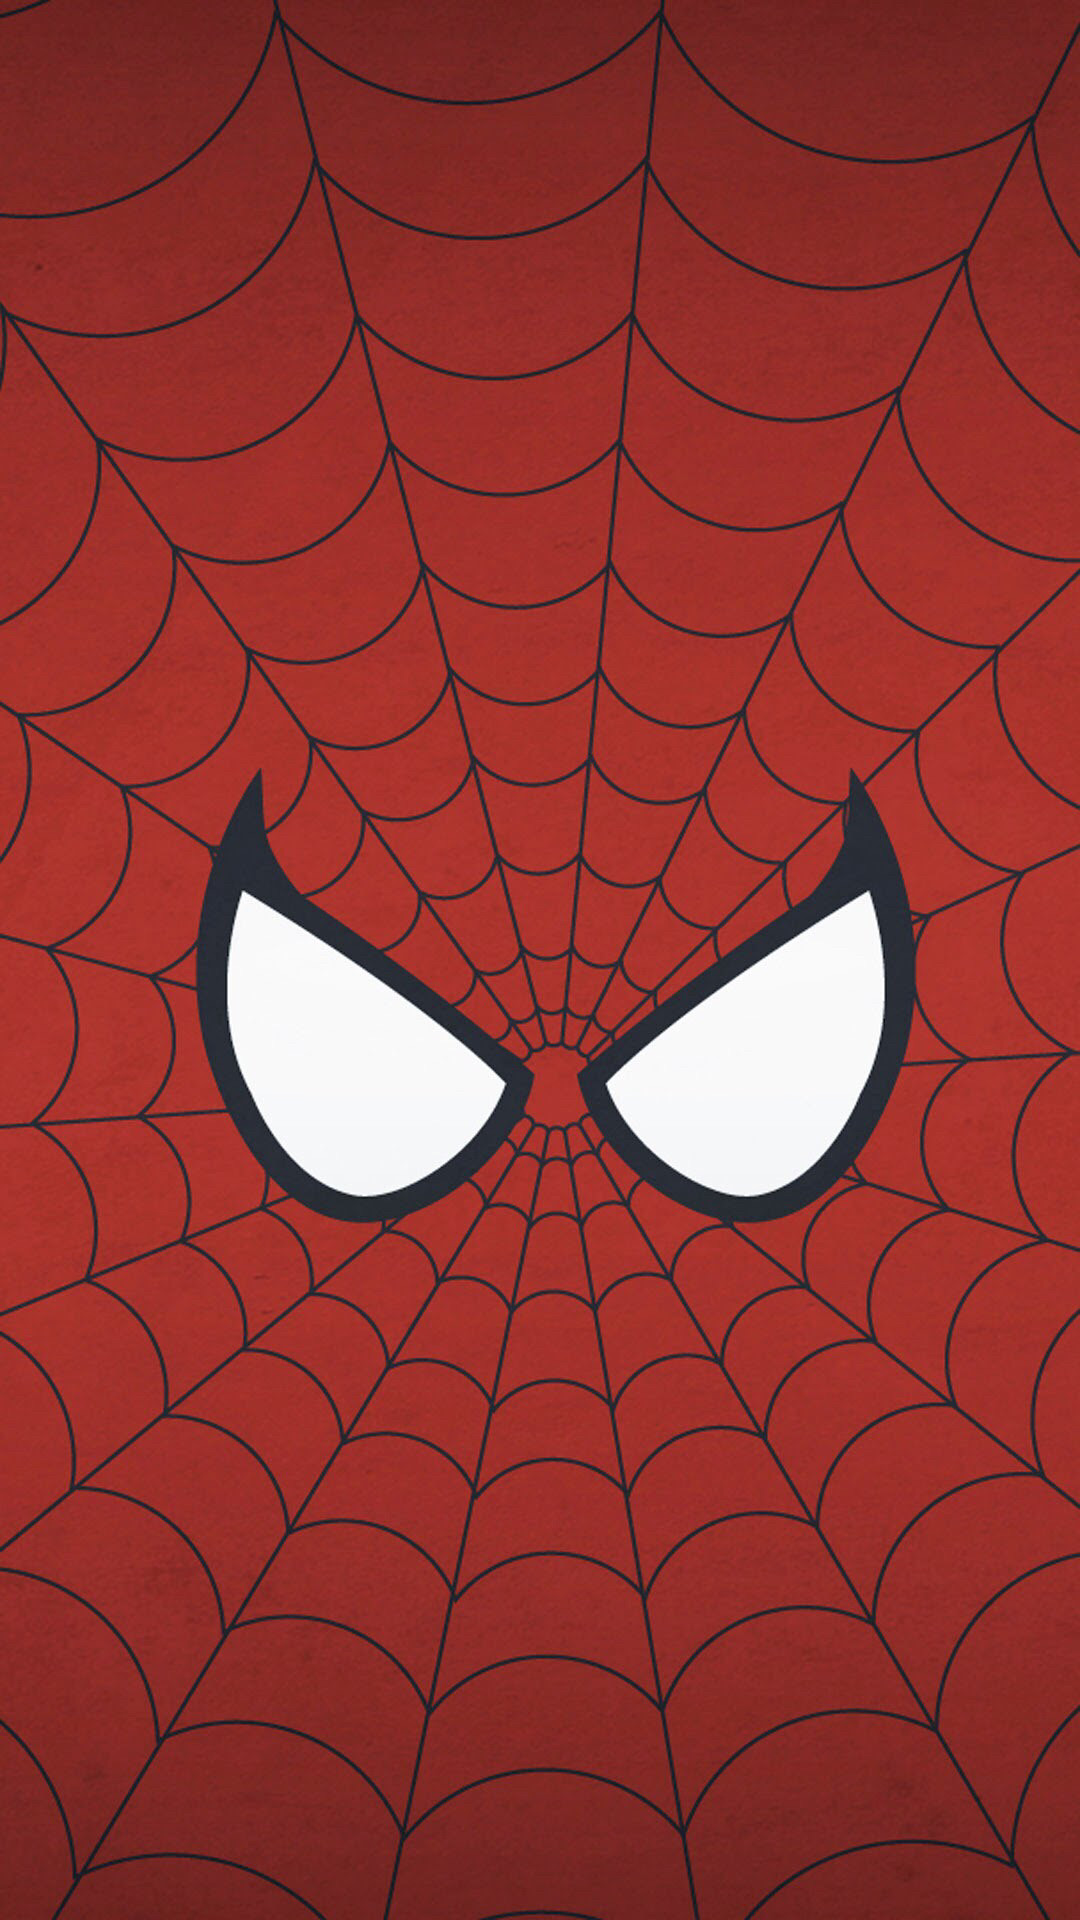 243 Spiderman Iphone Wallpaper Hd